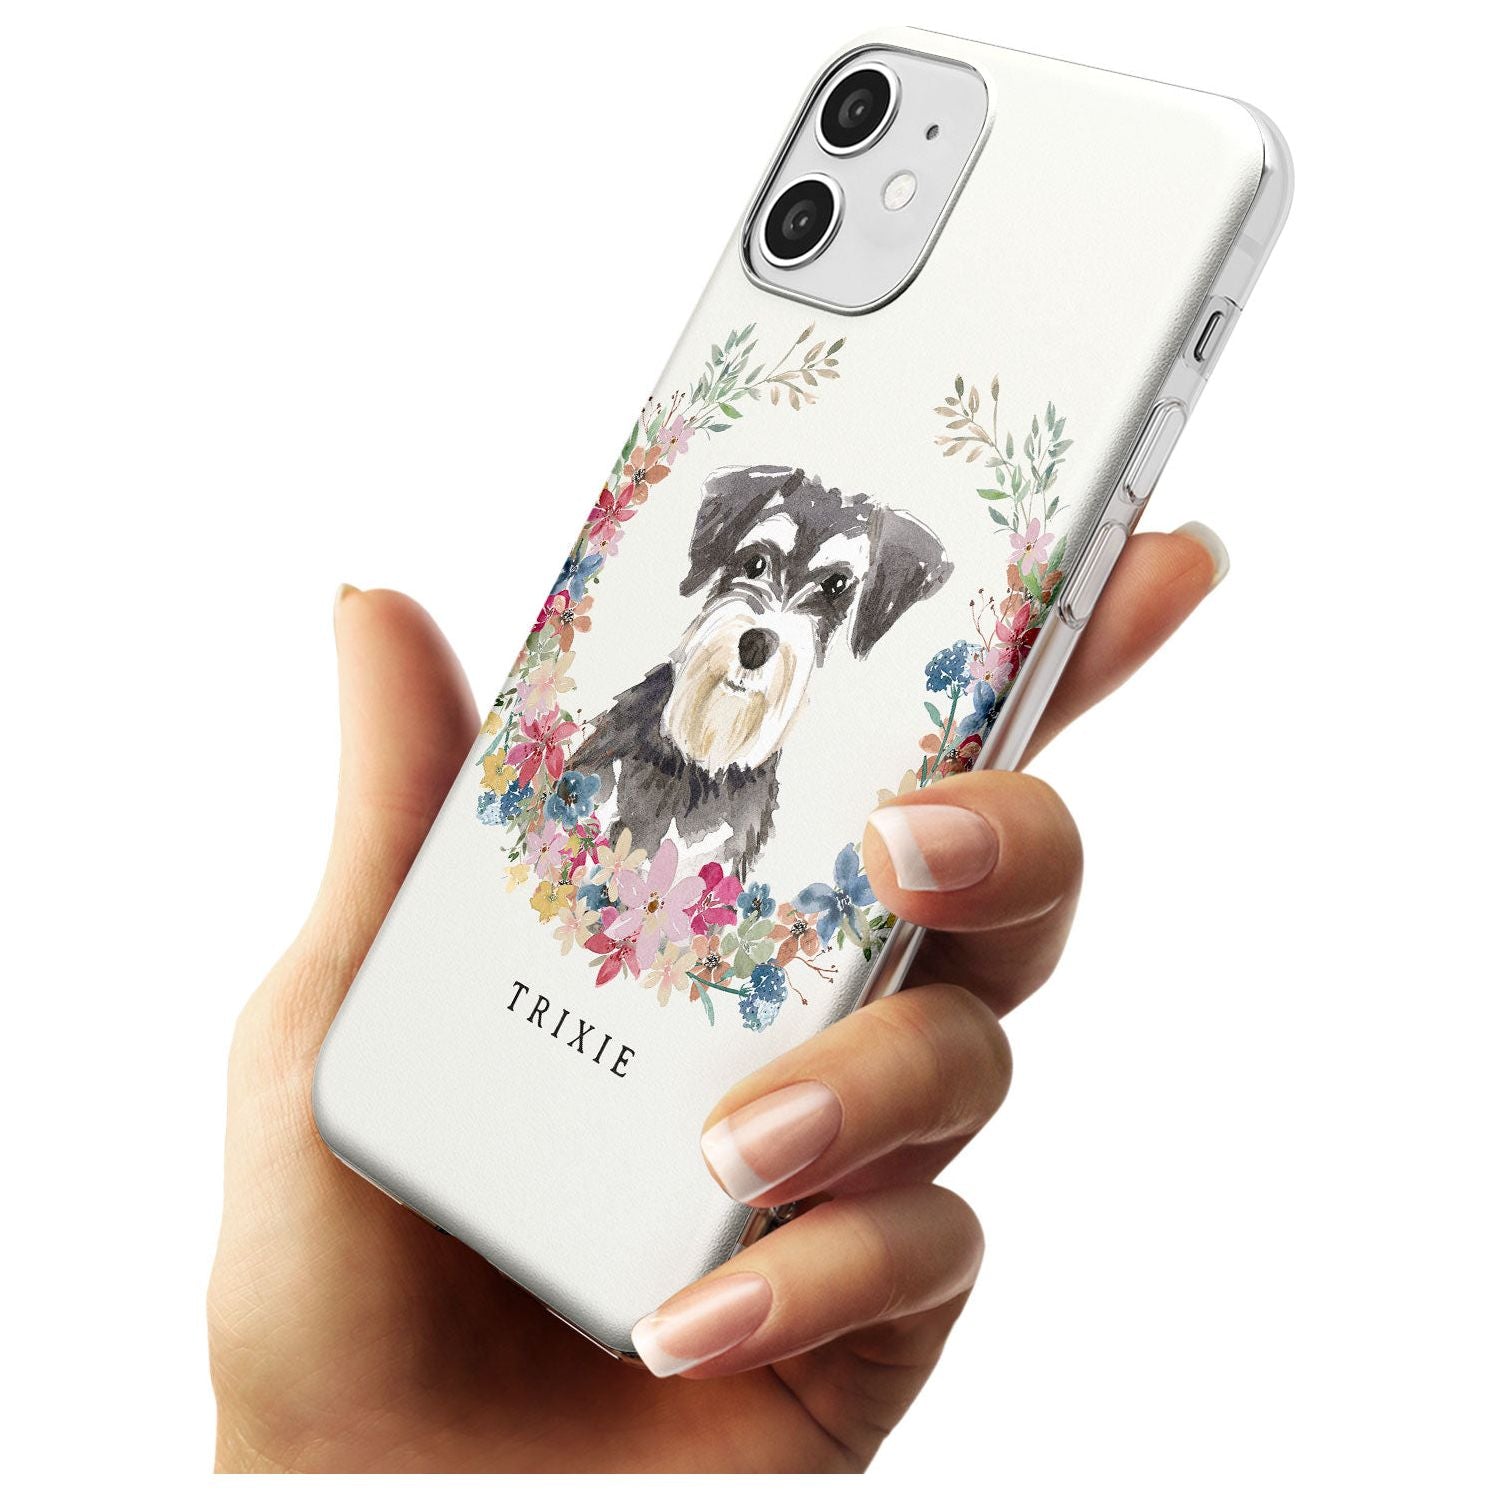 Miniature Schnauzer - Watercolour Dog Portrait Slim TPU Phone Case for iPhone 11